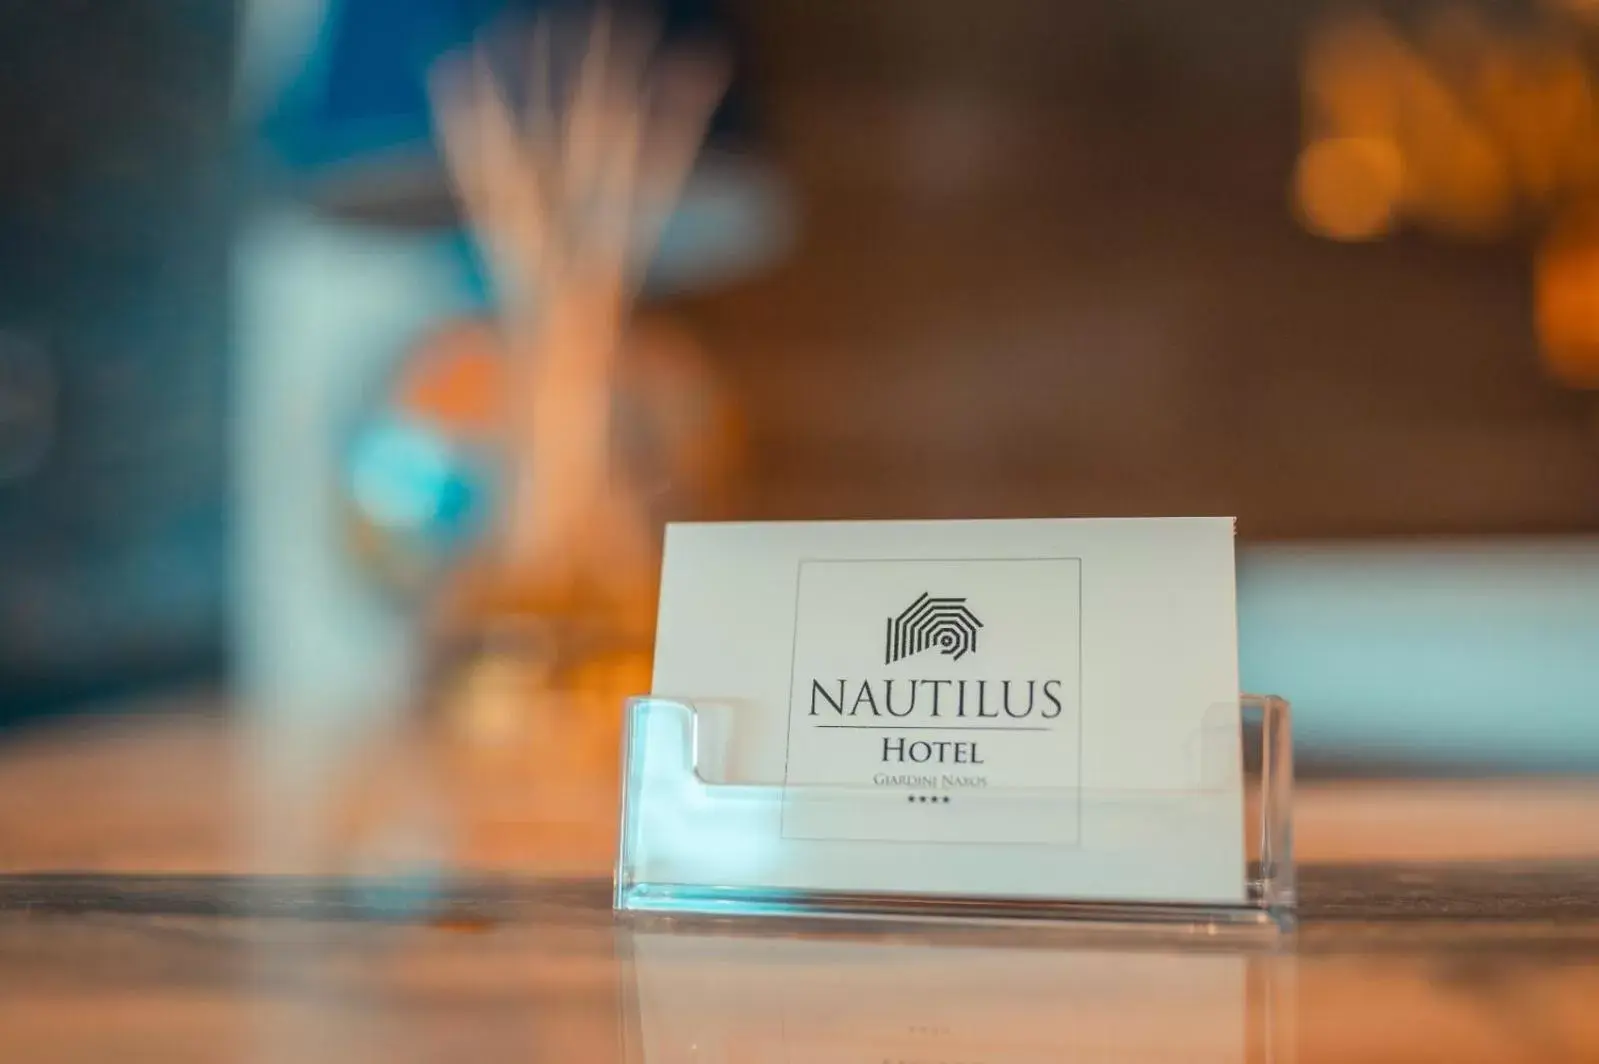 Logo/Certificate/Sign in Nautilus Hotel